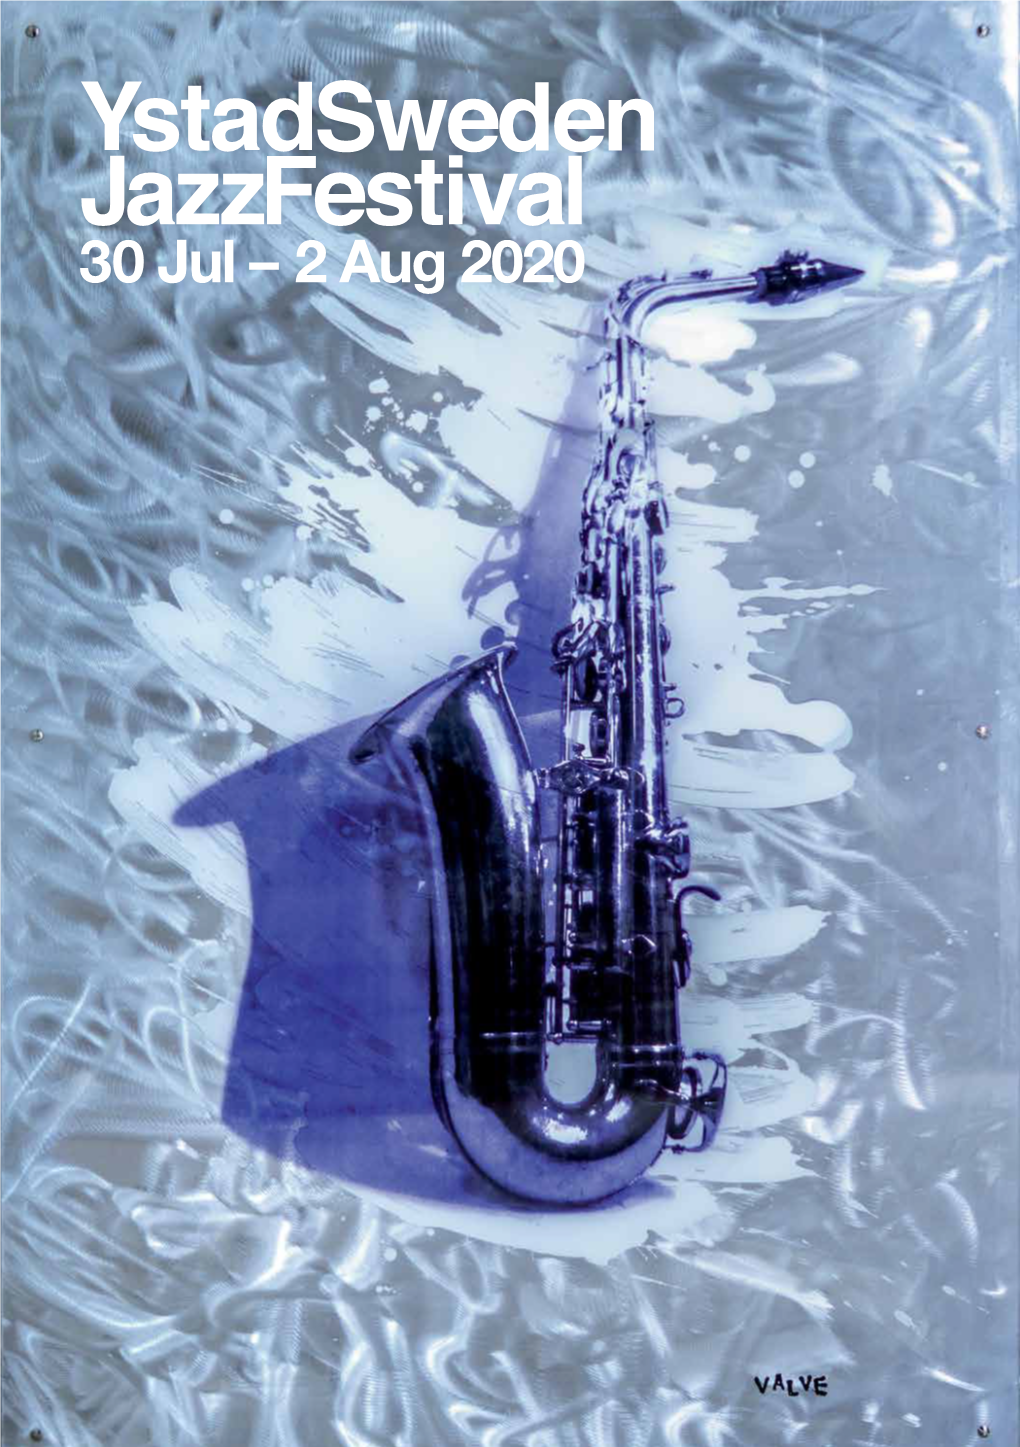 Ystad Sweden Jazz Festival 2020!